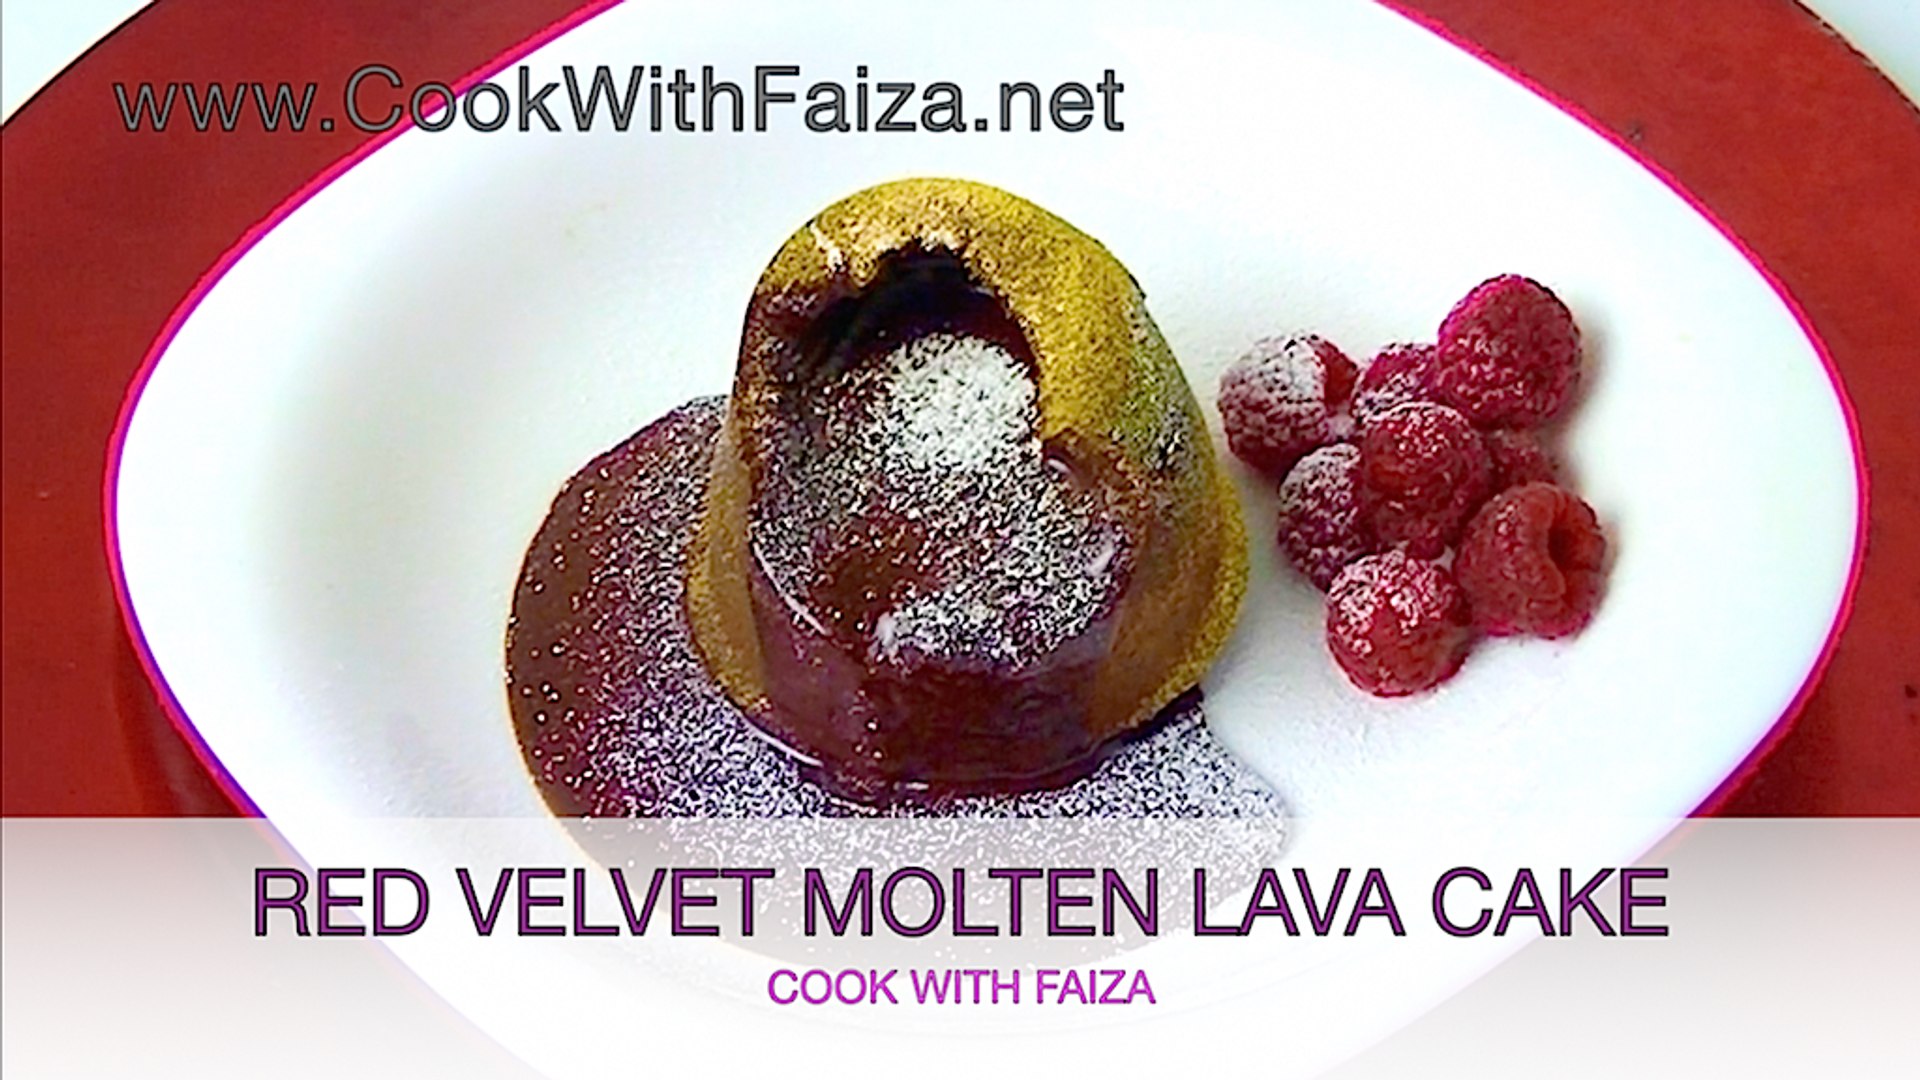 RED VELVET MOLTEN LAVA CAKE COOK WITH FAIZA